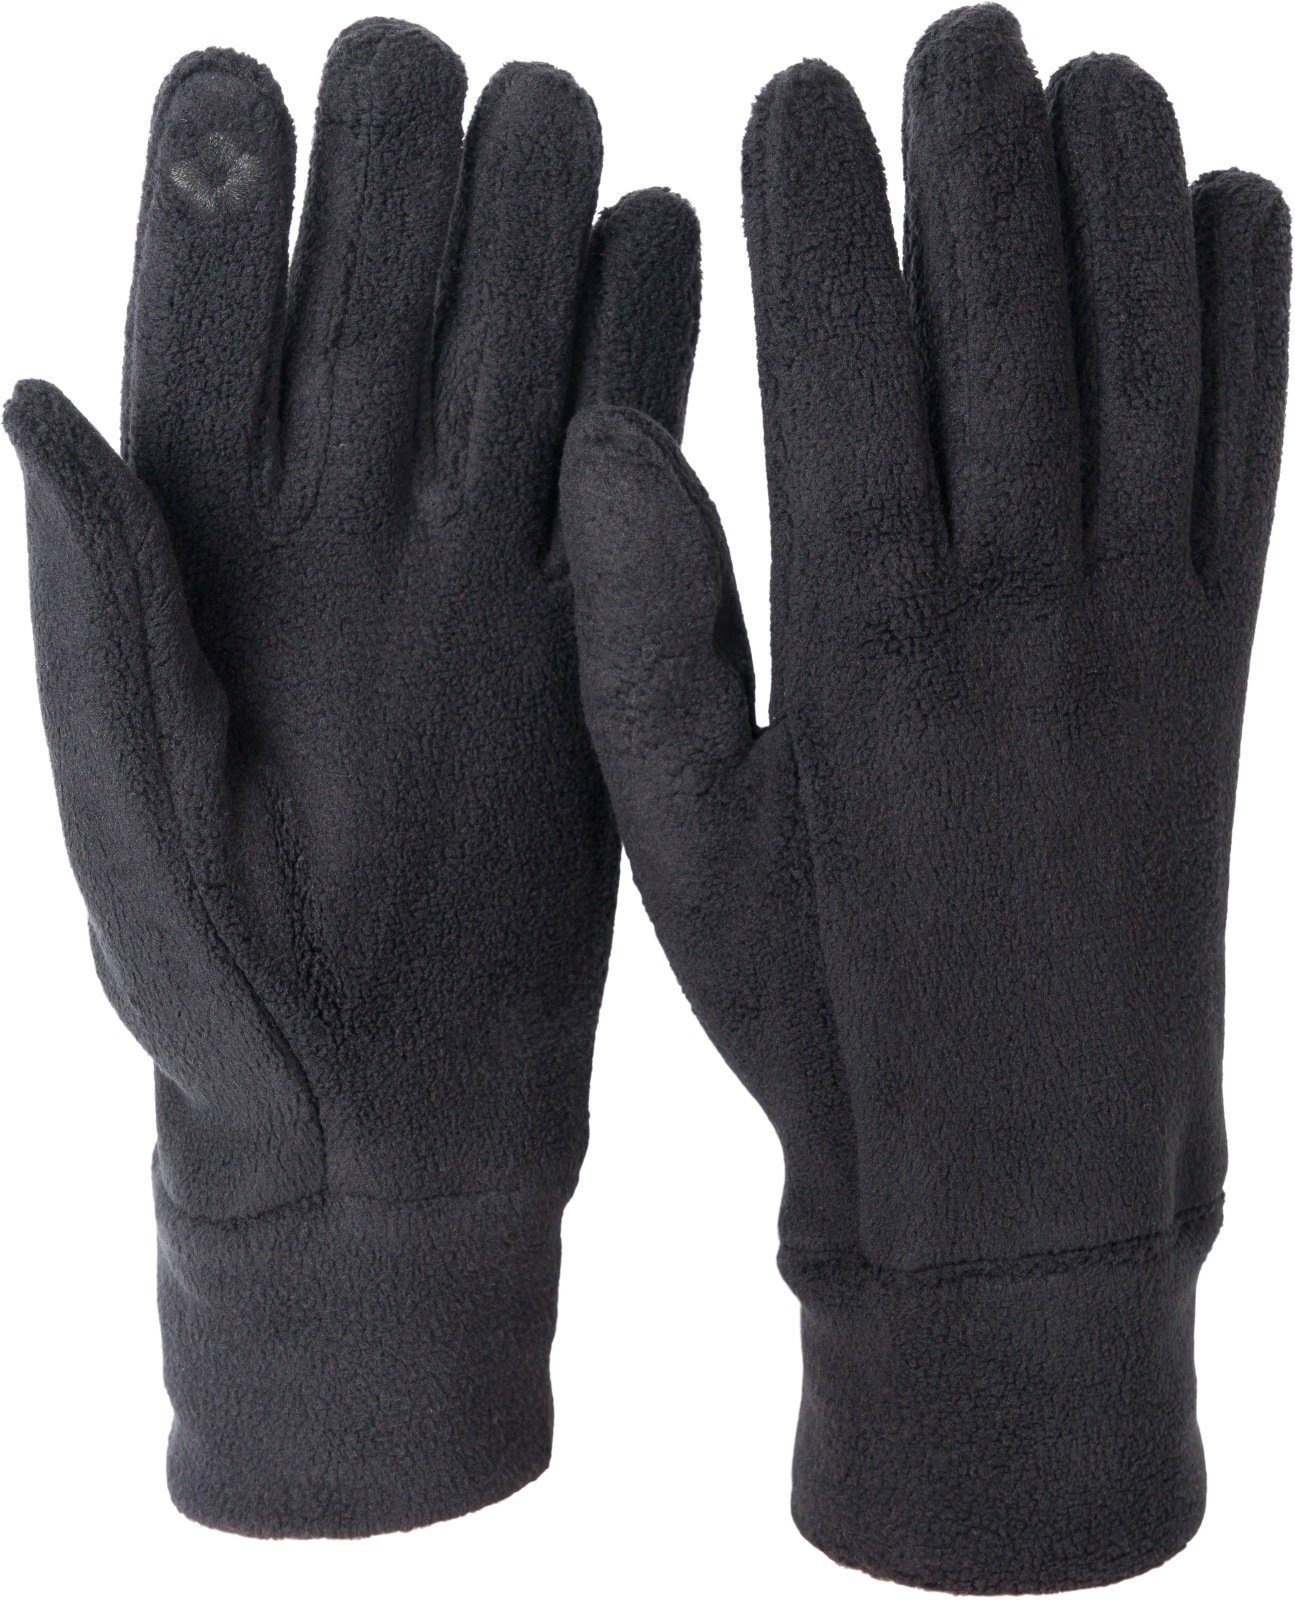 styleBREAKER Fleecehandschuhe Einfarbige Touchscreen Fleece Handschuhe Schwarz